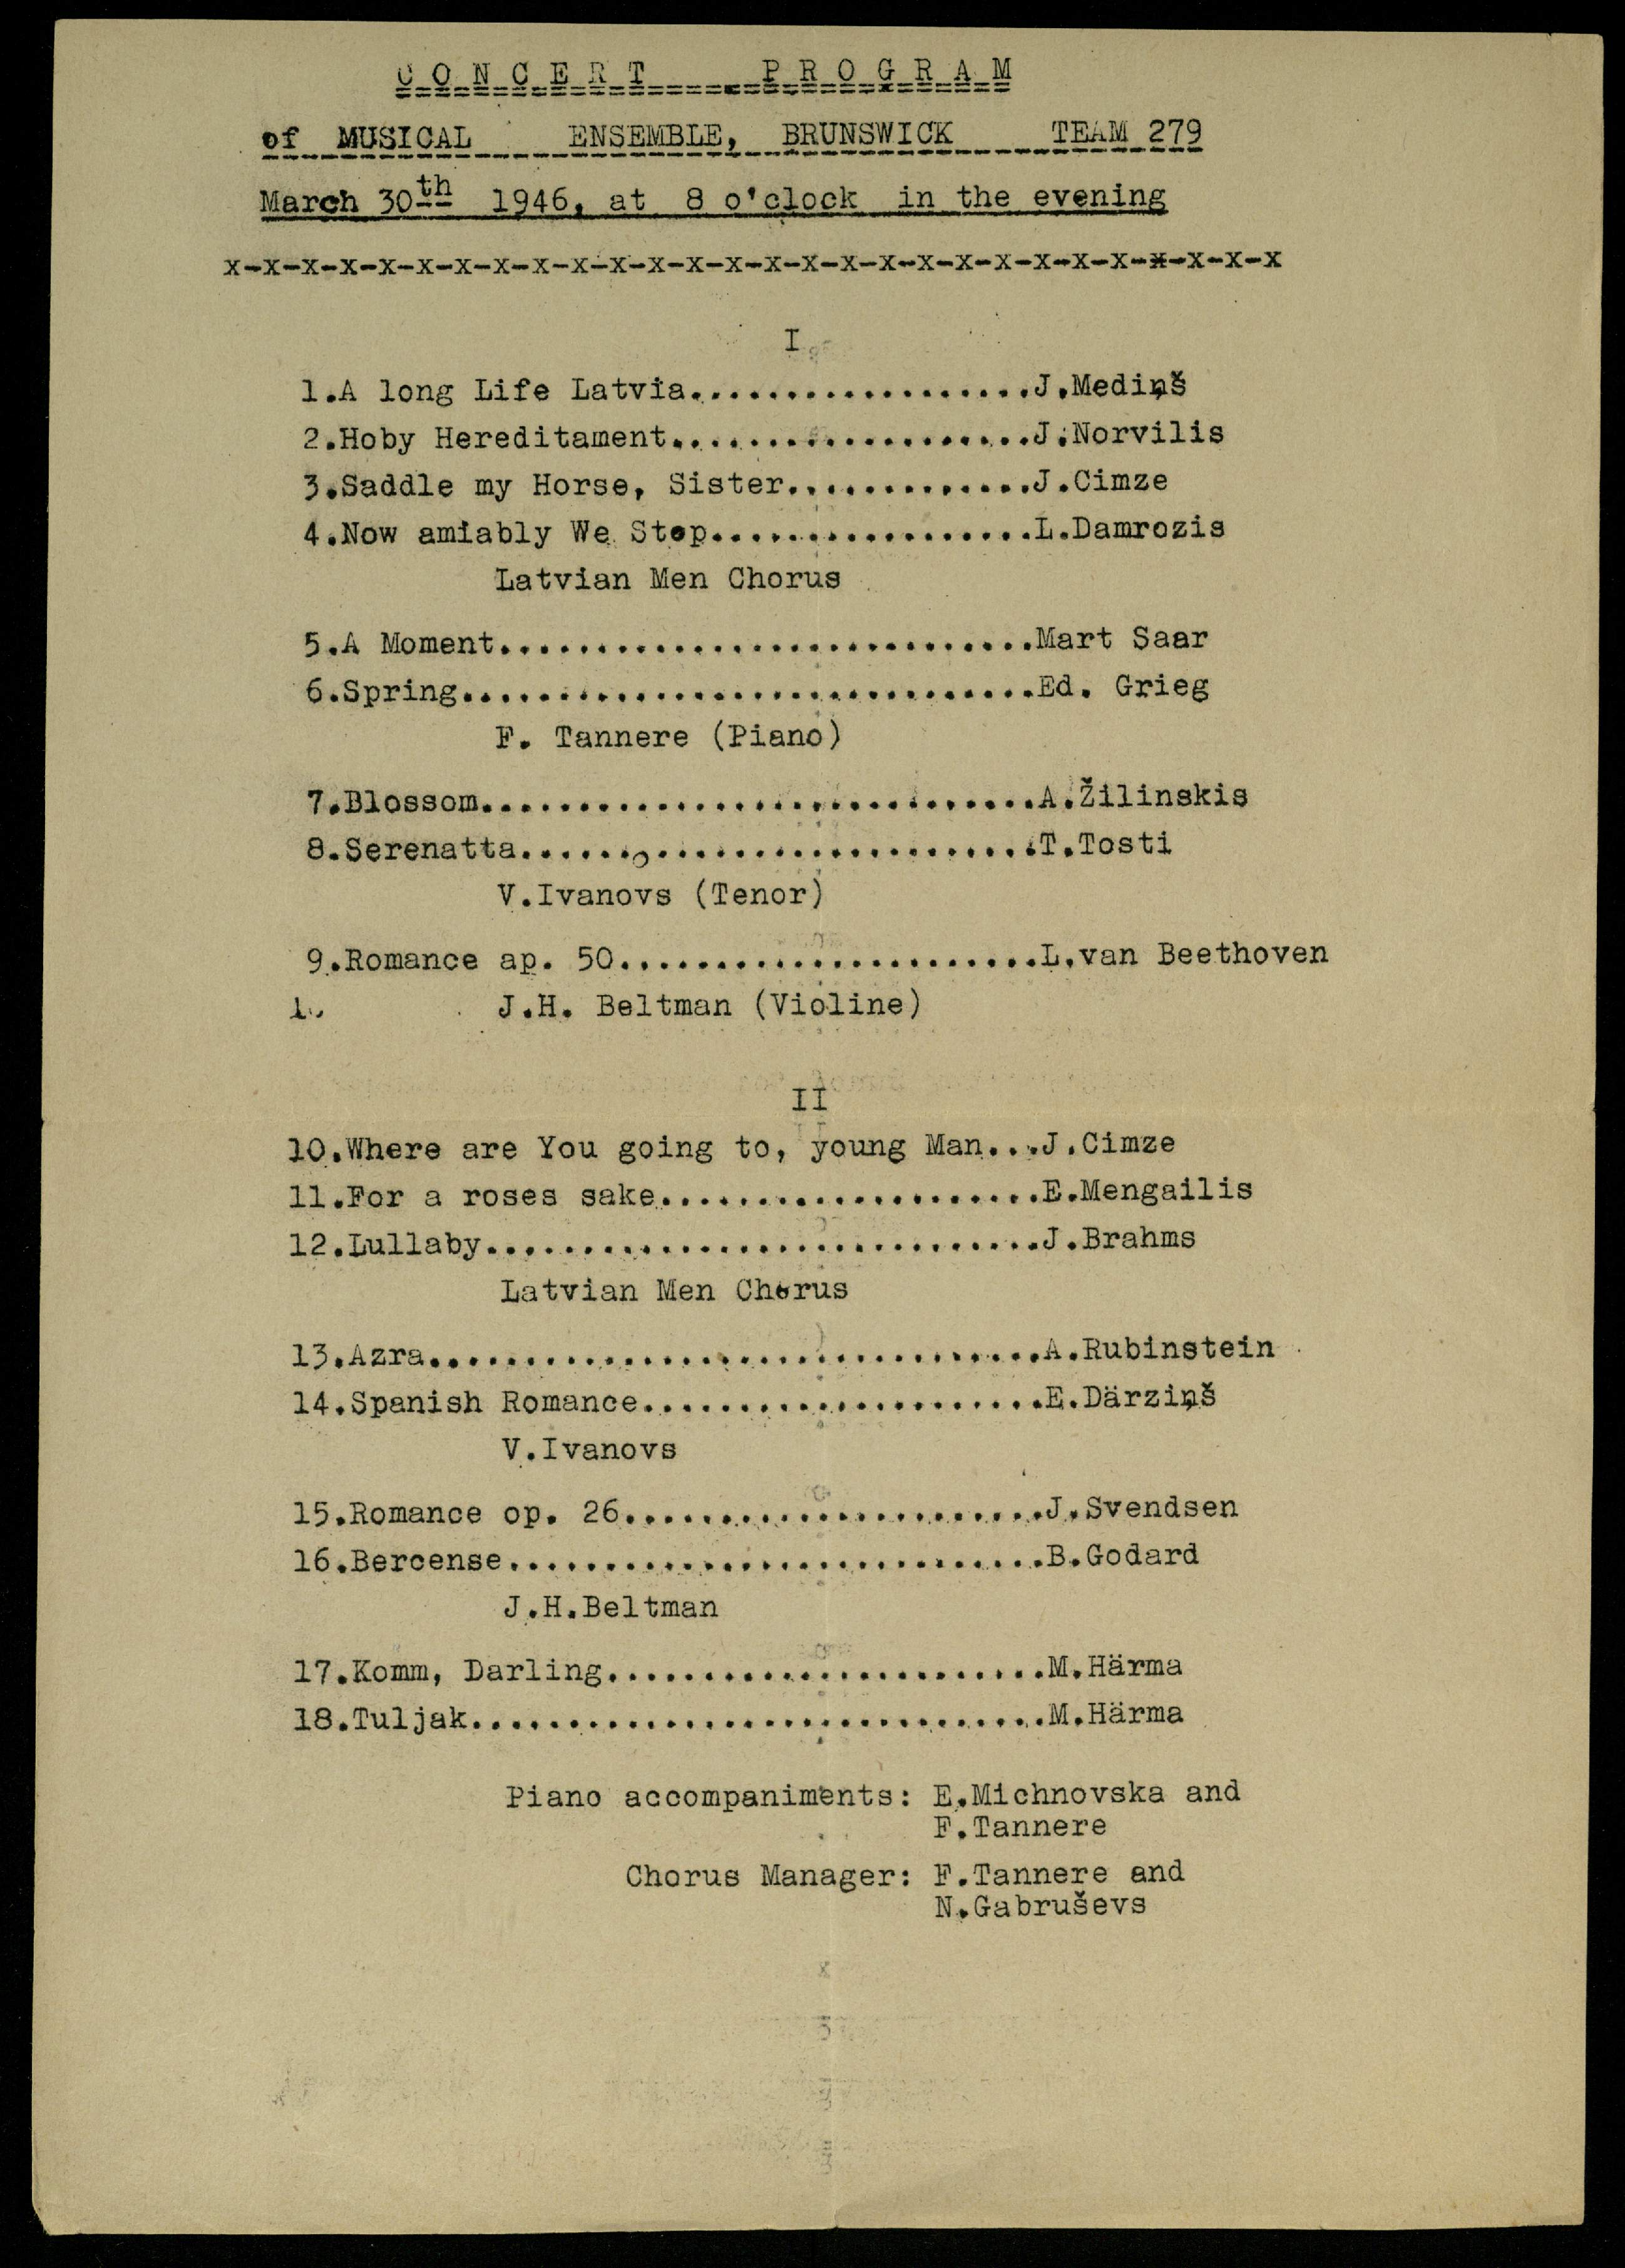 Concert program of musical ensemble, Brunswick team 279 March 30th 1946